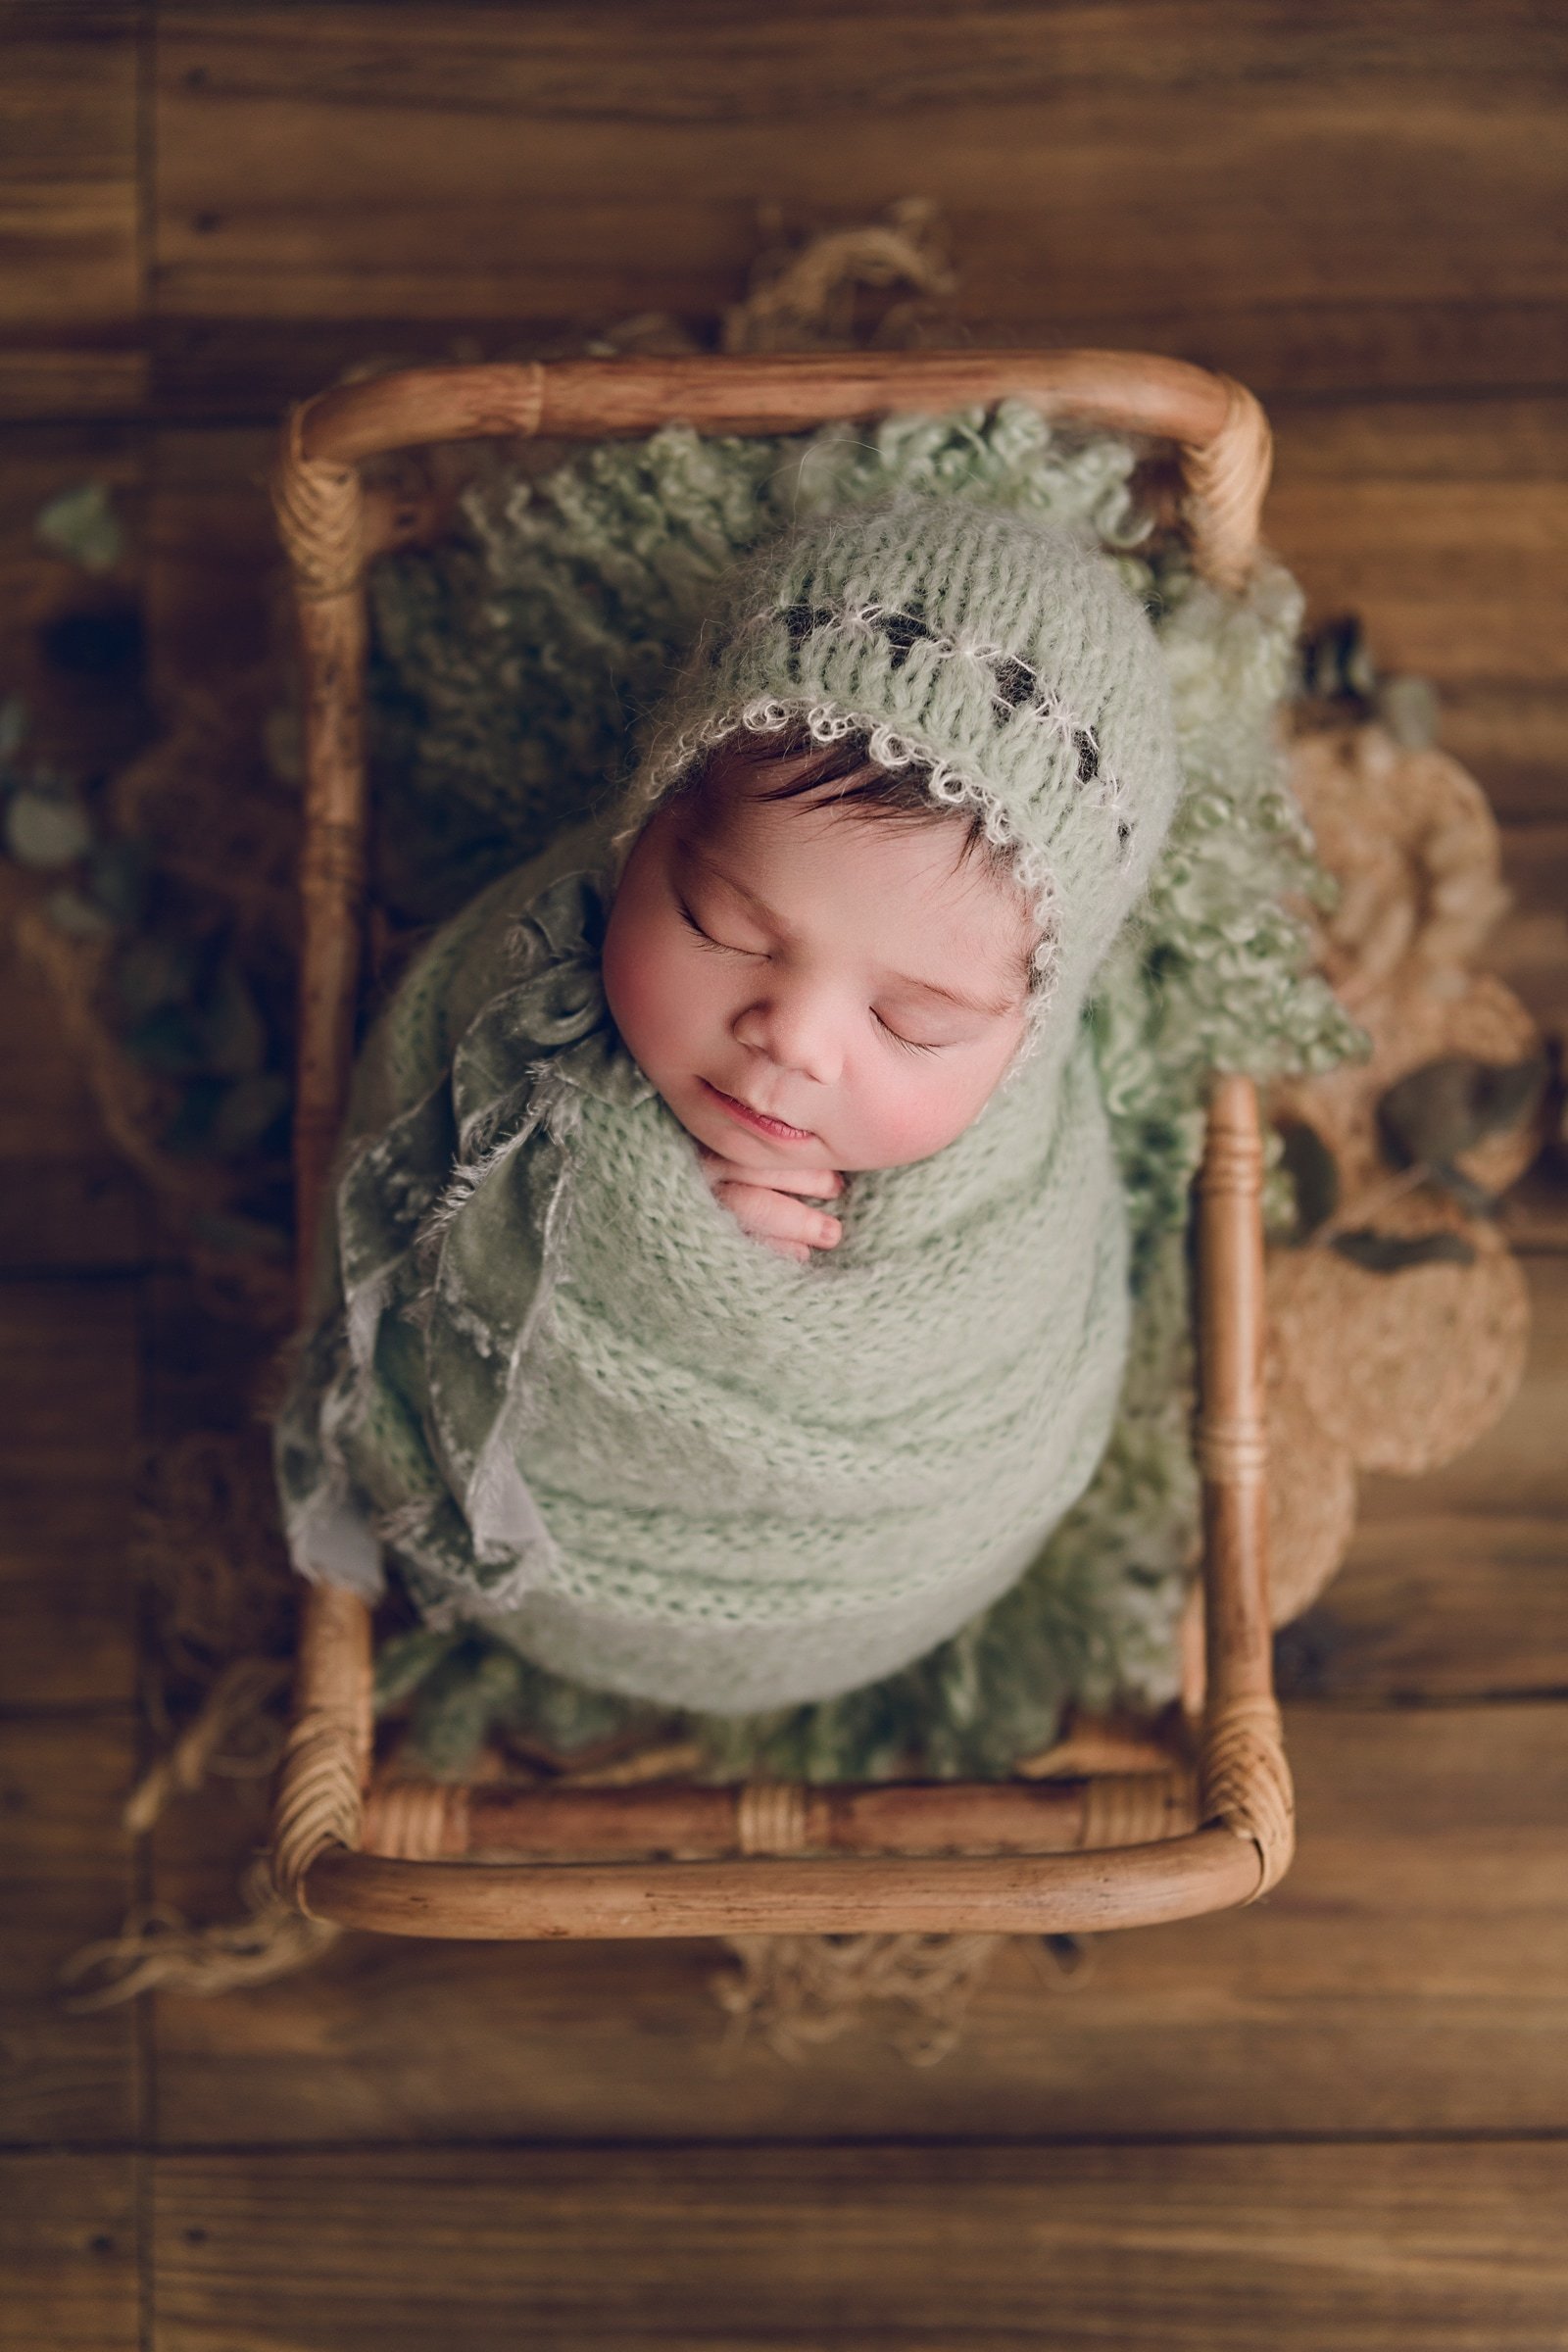  Melbourne Newborn Photographer | Emma Pender Photography